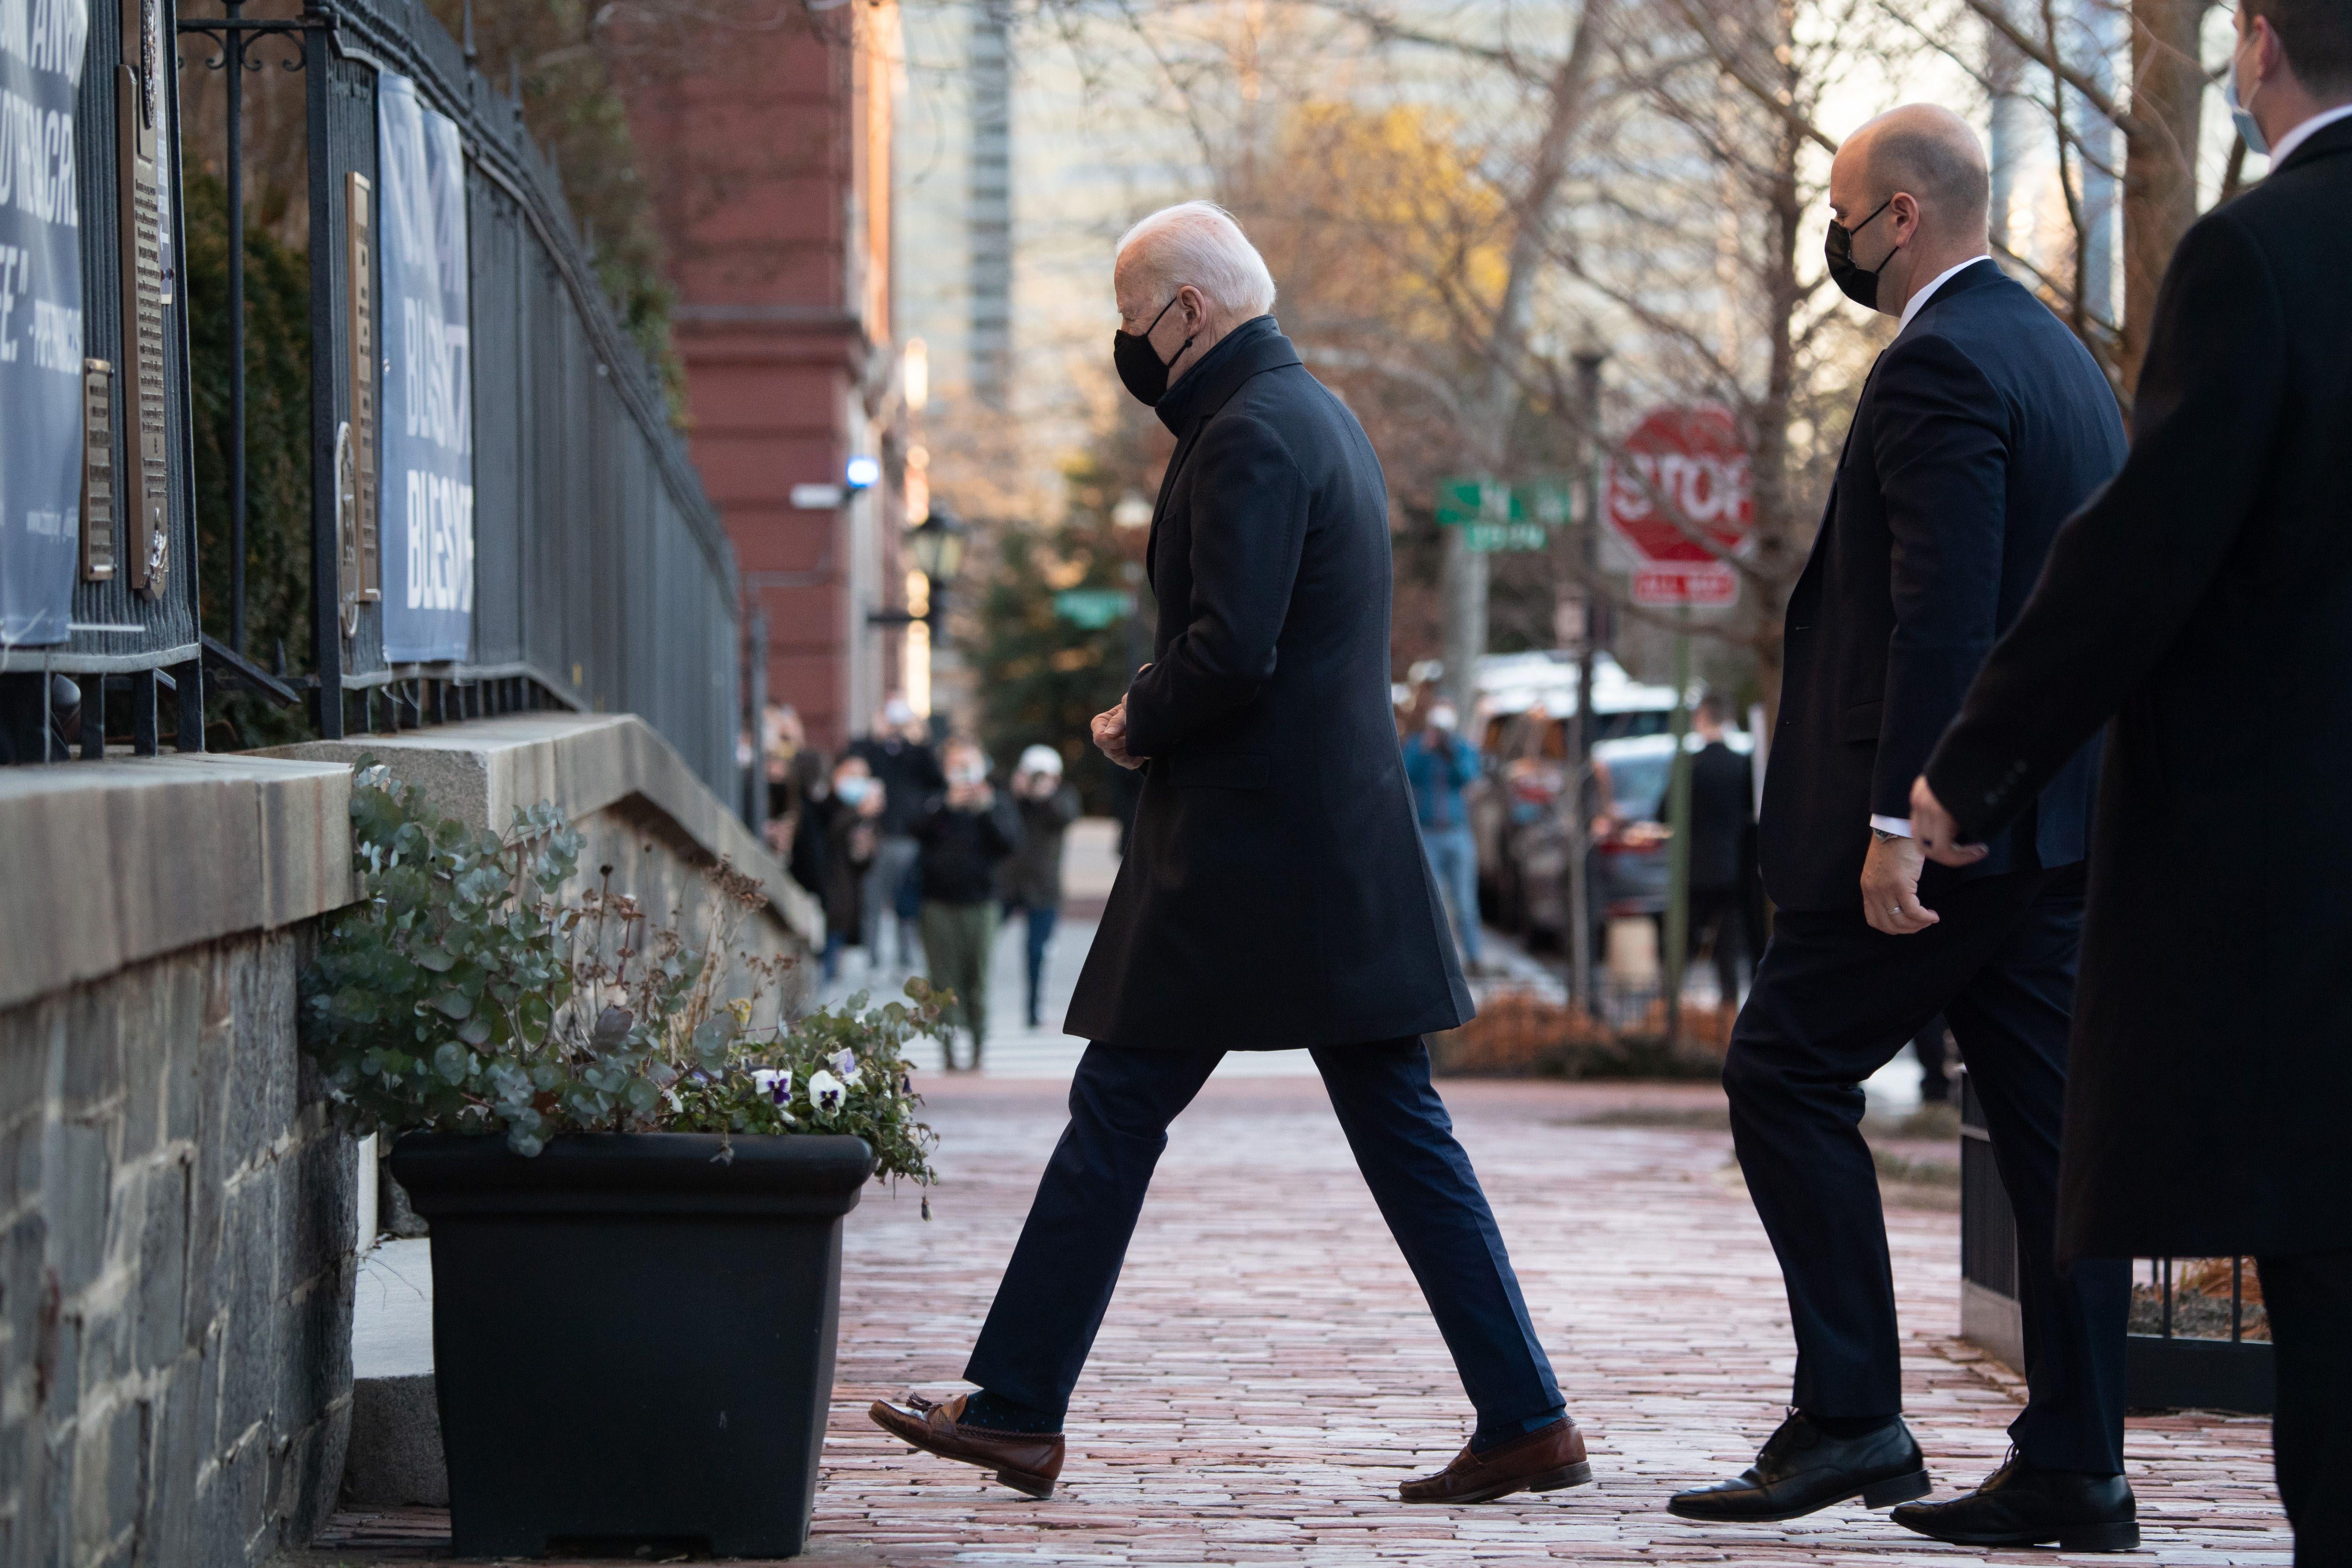 Biden walks across a sidewalk into Holy Trinity Catholic Church in Washington on March 6, with security following behind him